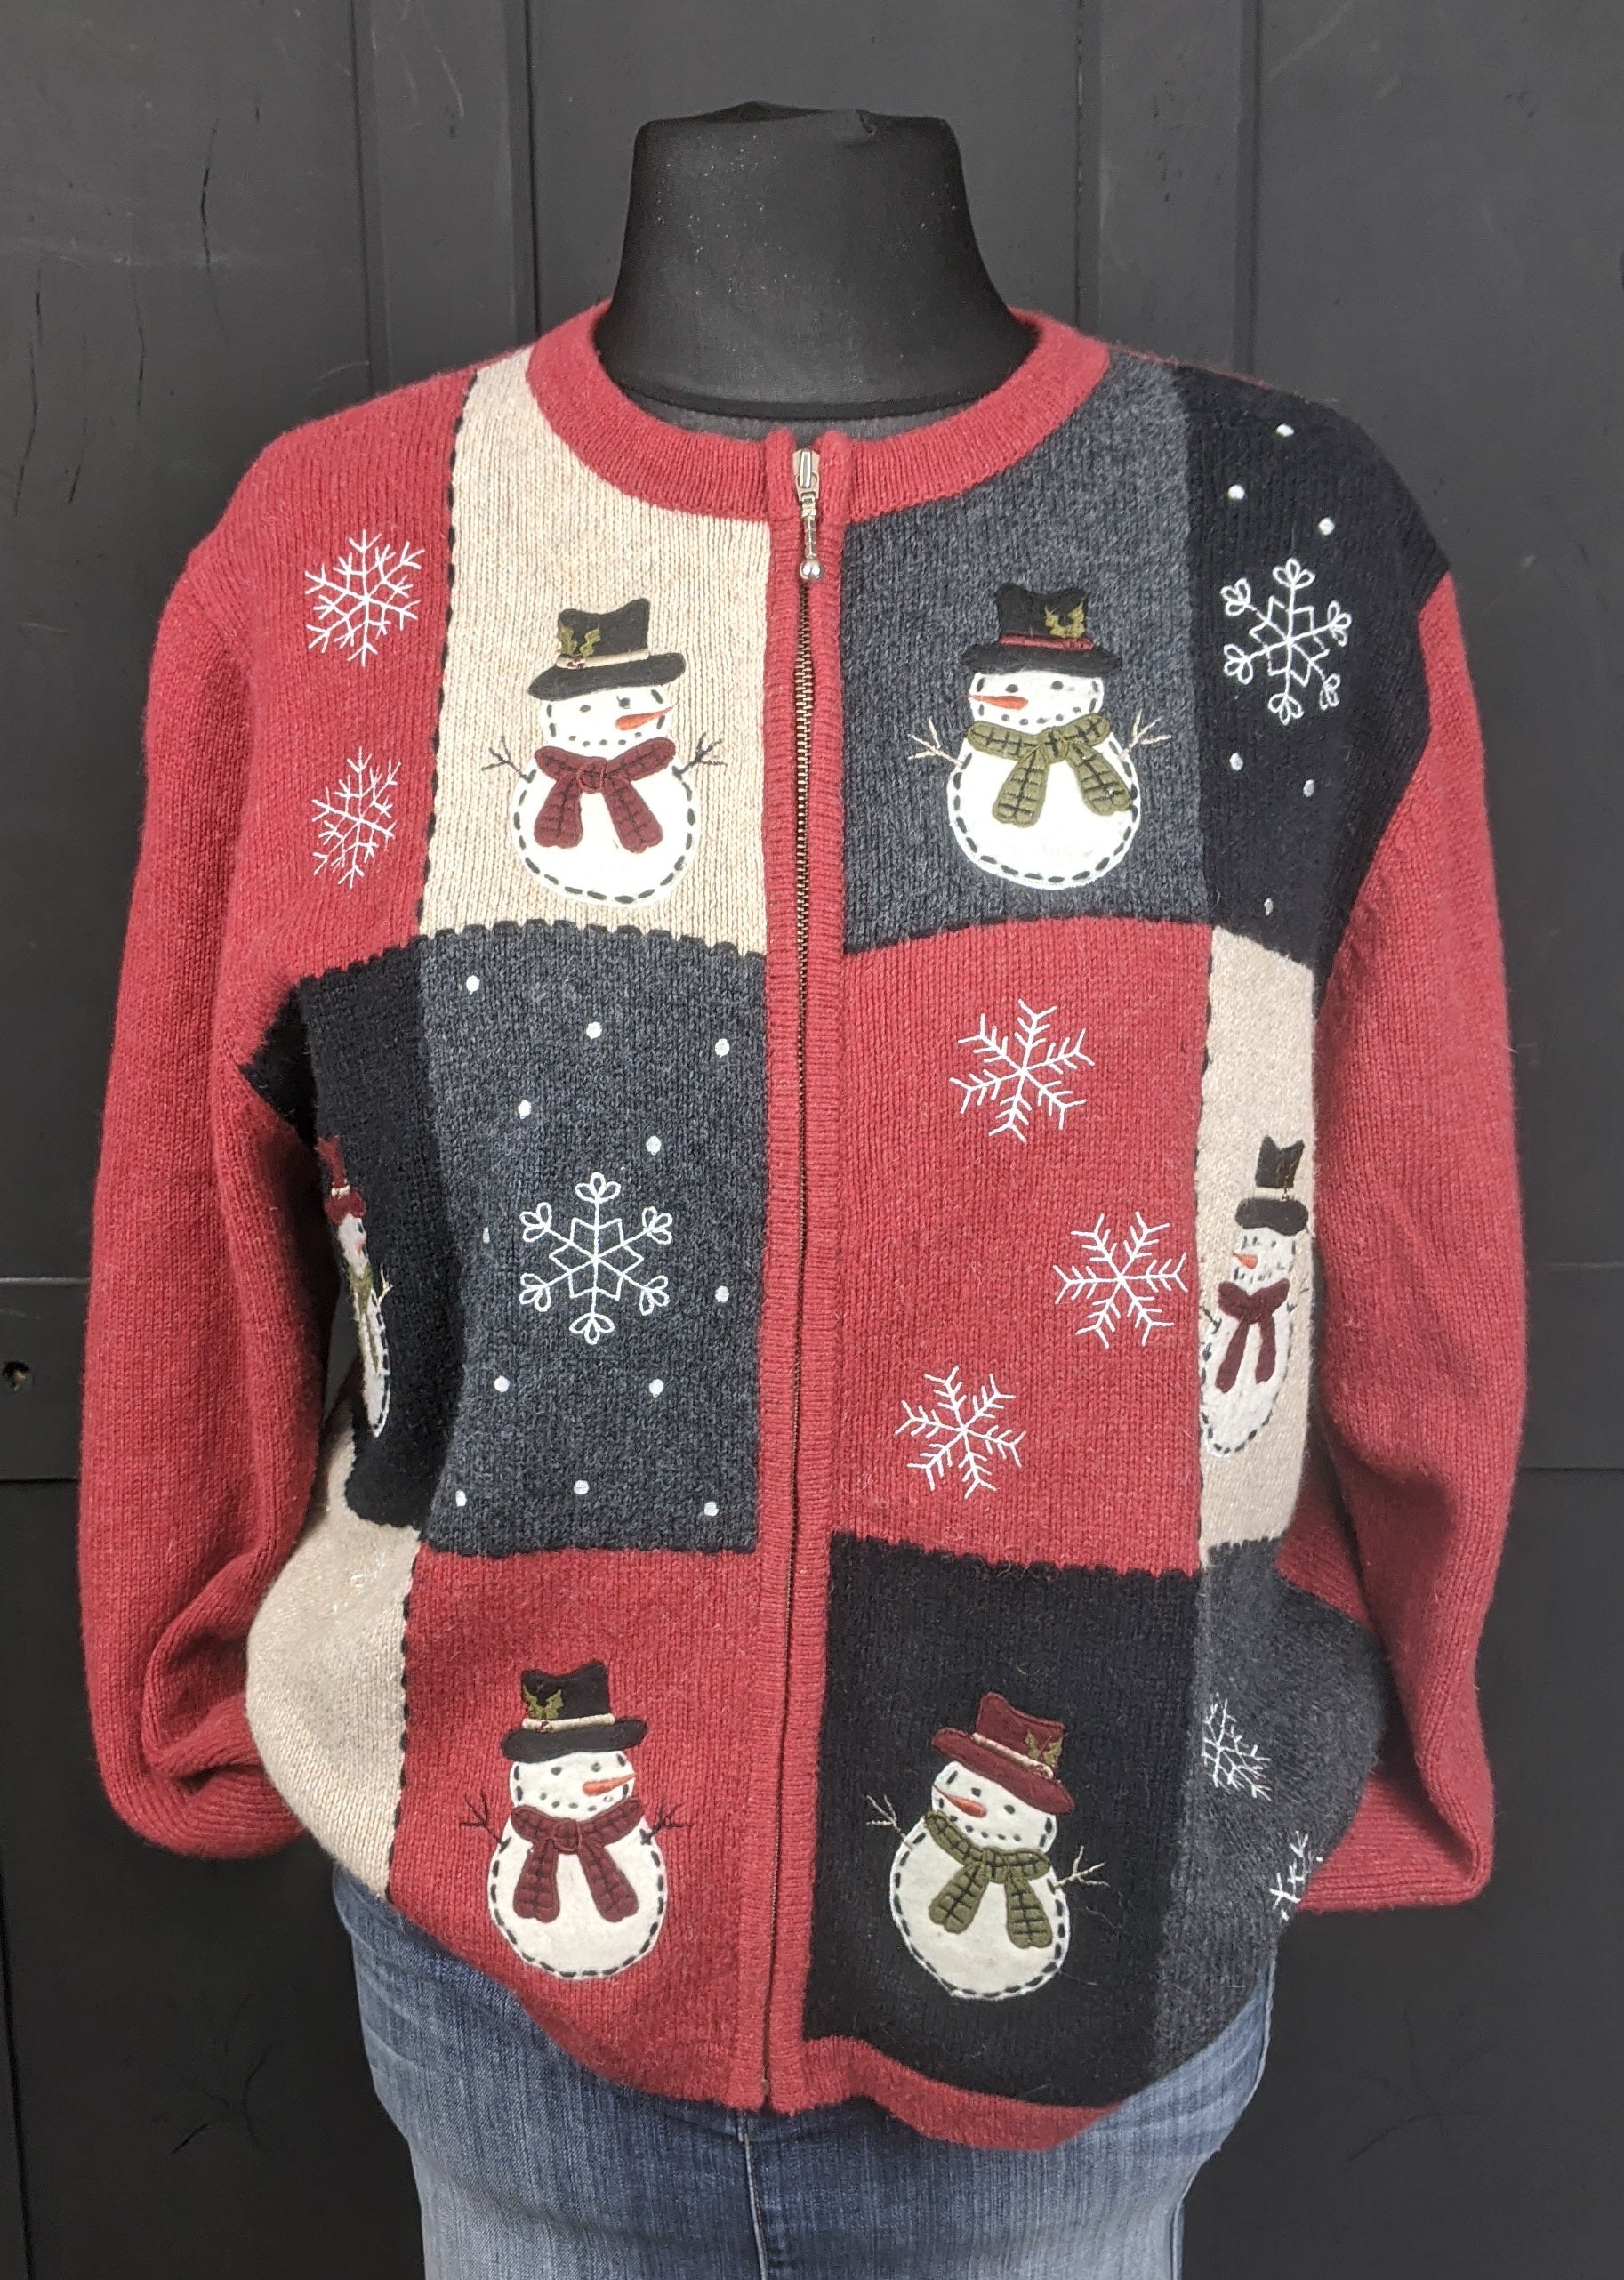 Snowman Christmas cardigan size XL Item 854